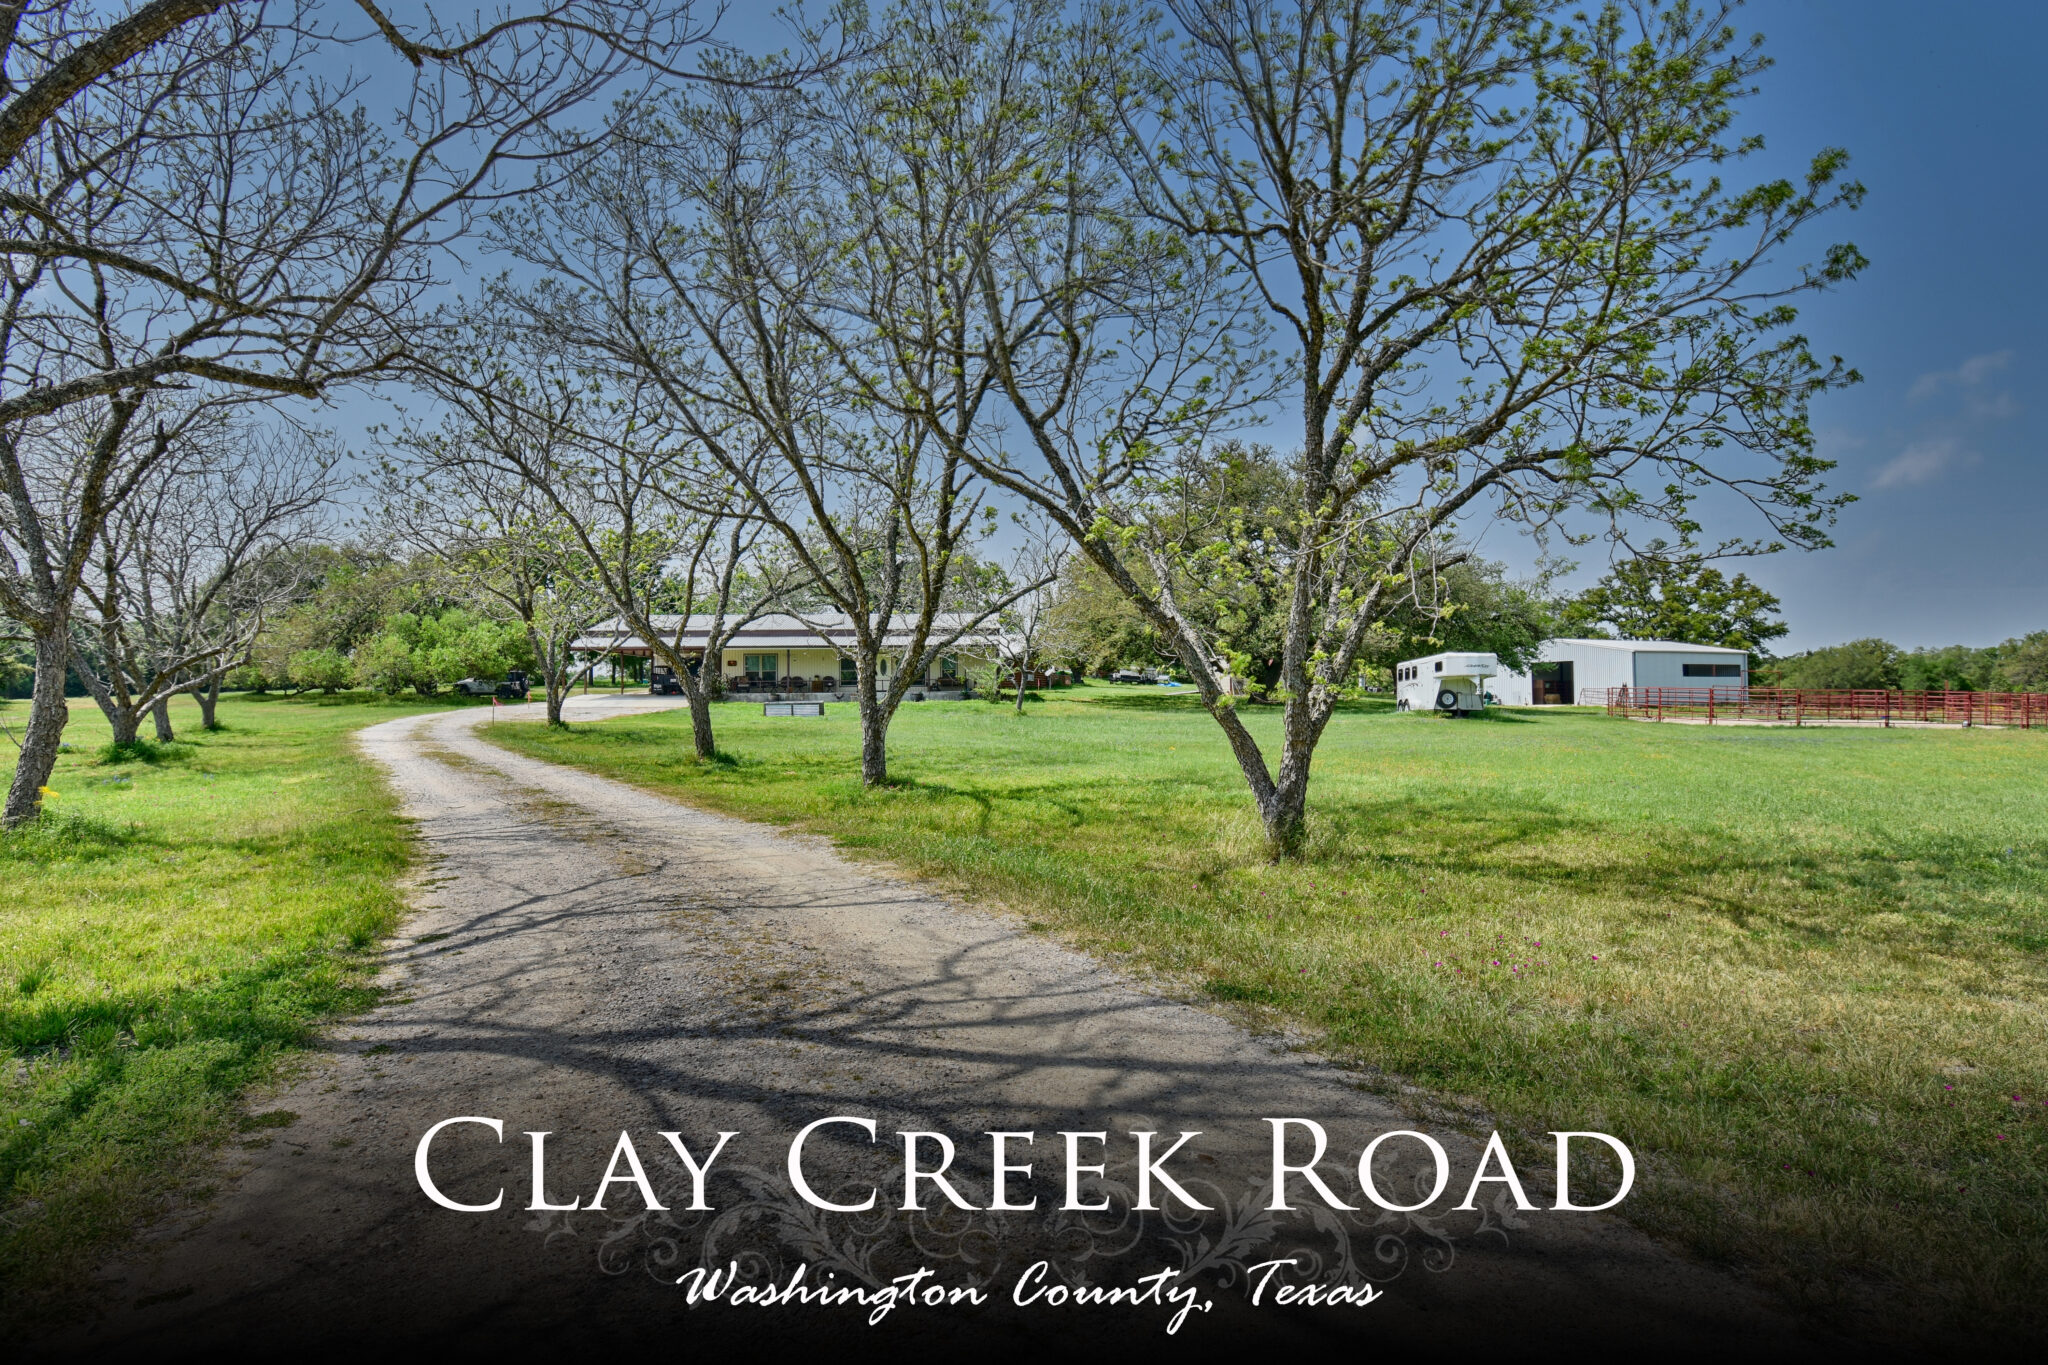 Clay Creek Road